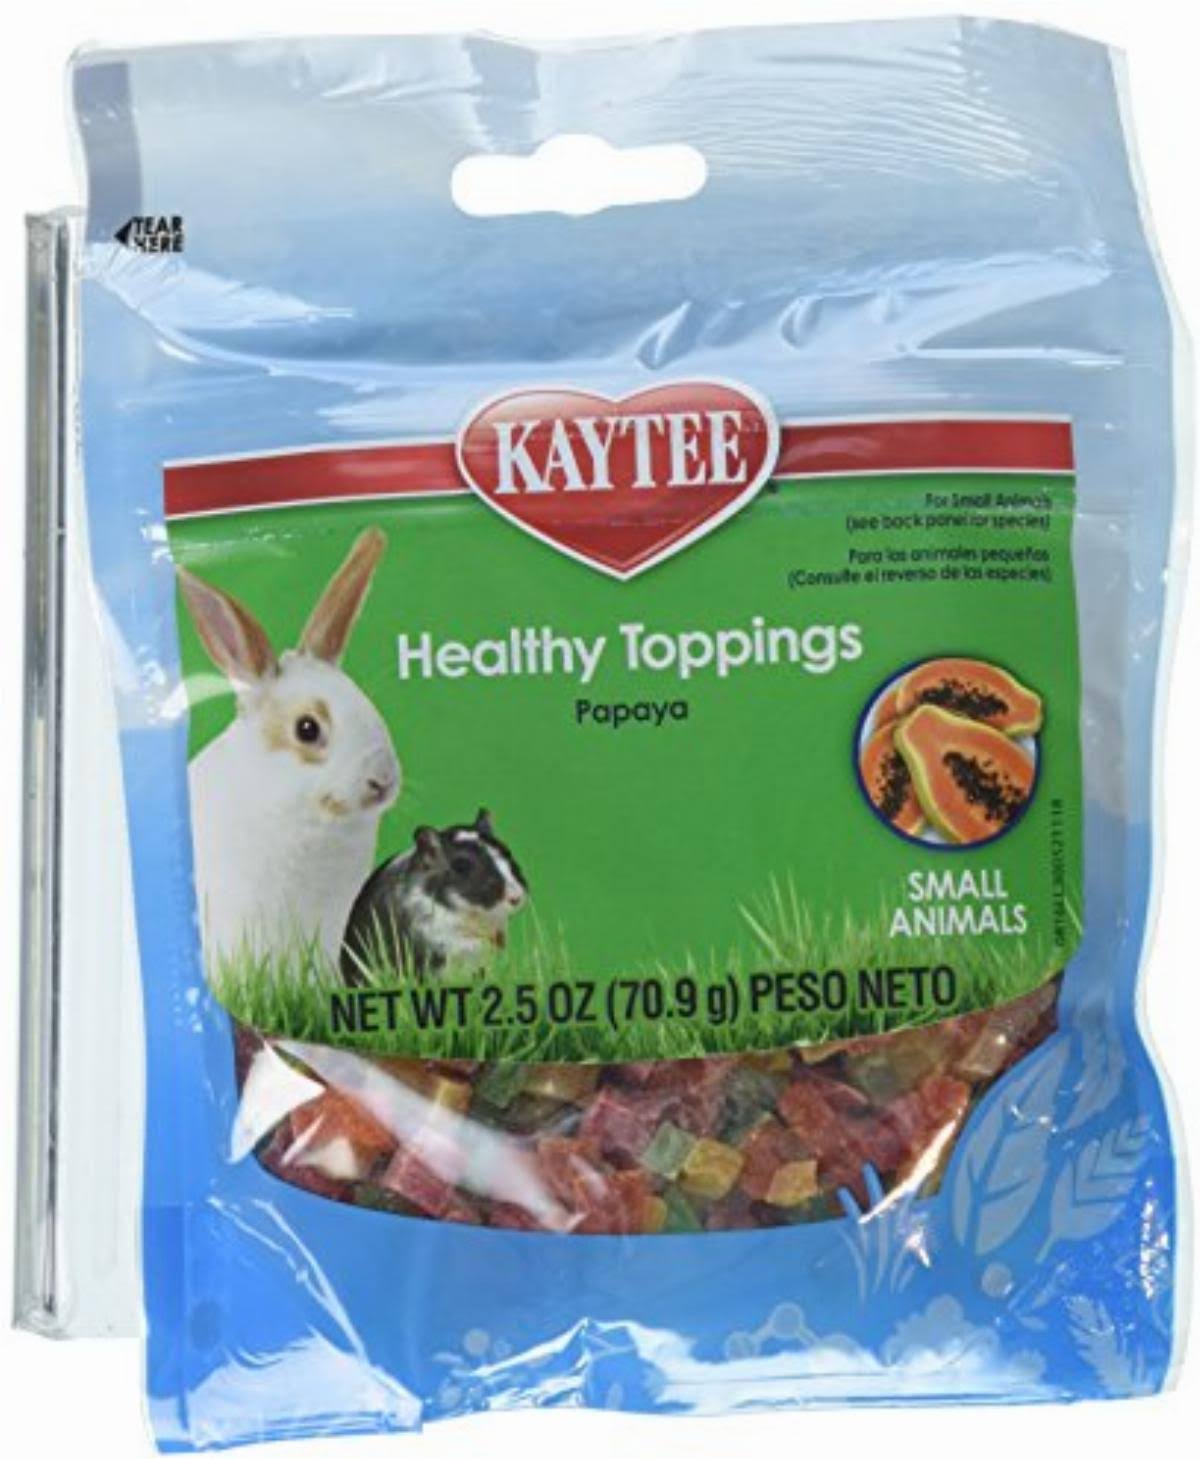 Kaytee Fiesta Healthy Toppings - Papaya Treat for Small Animals, 2.5oz